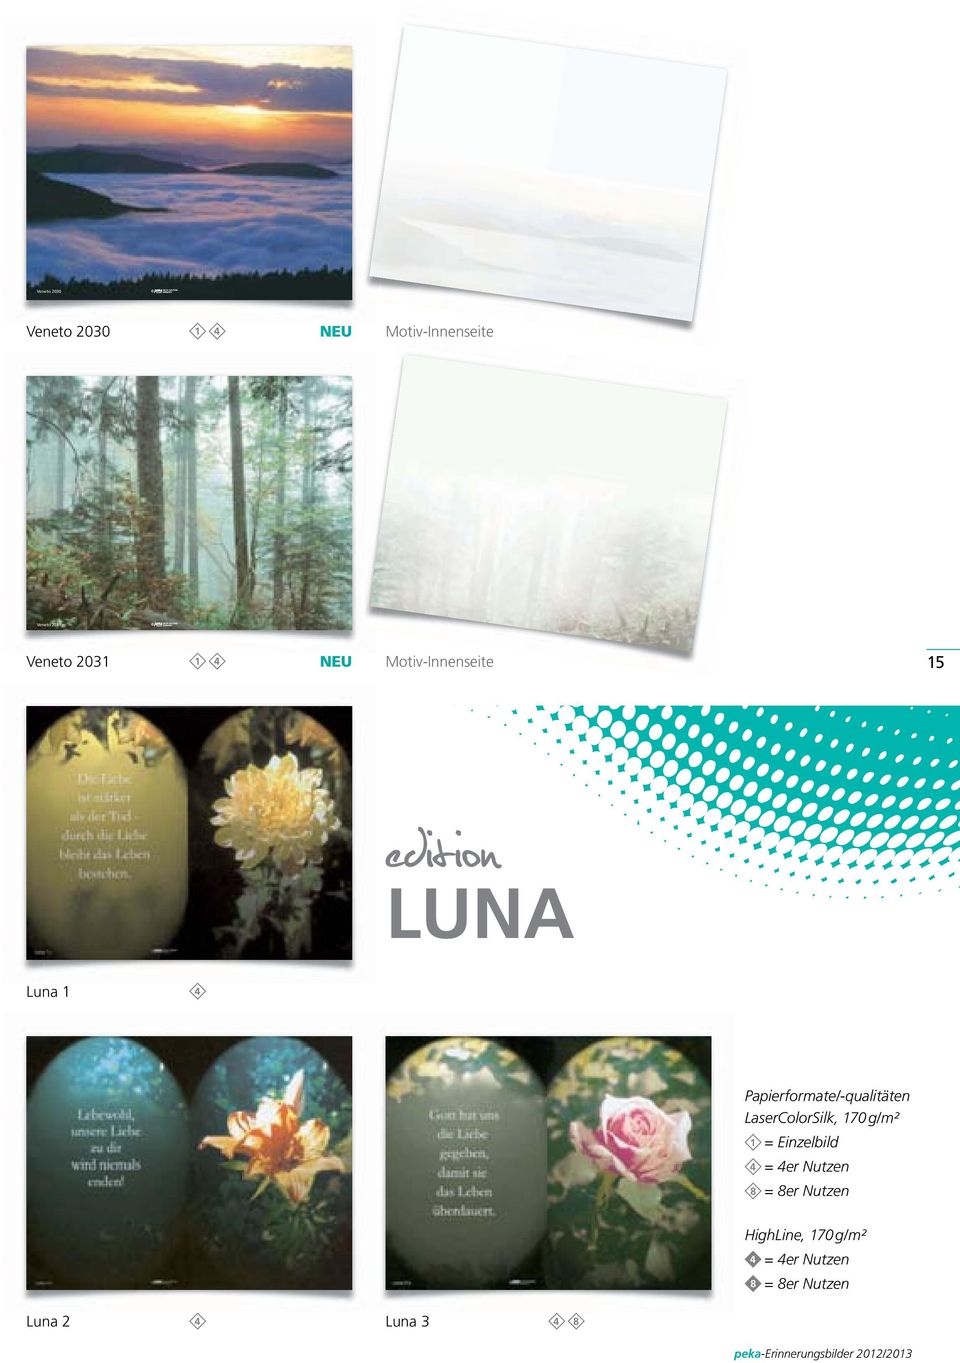 Luna Papierformate/-qualitäten LaserColorSilk, 170